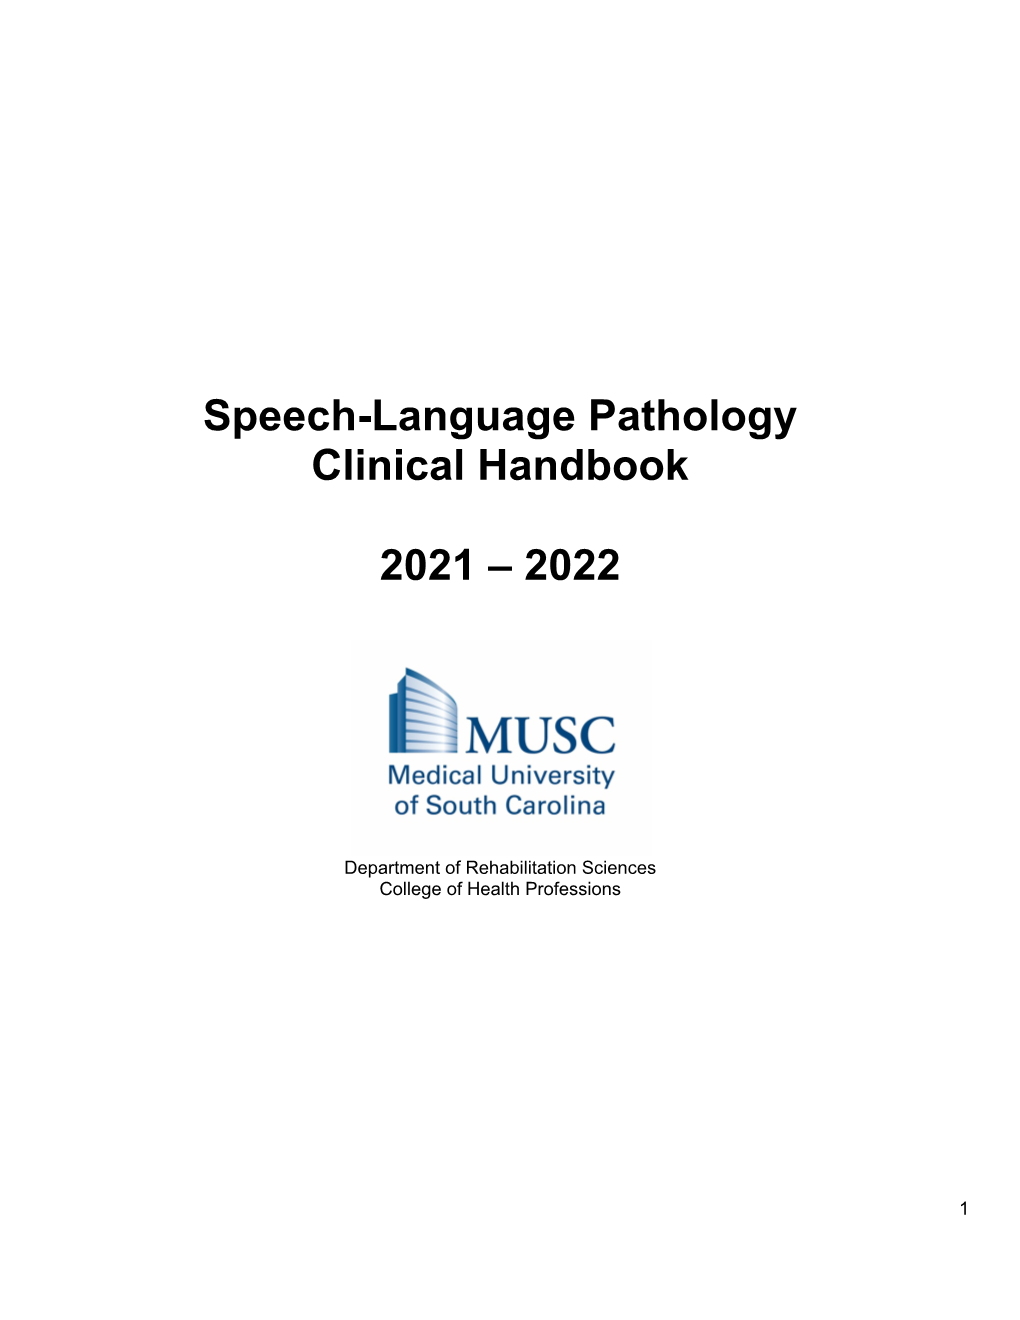 Speech-Language Pathology Clinical Handbook 2021